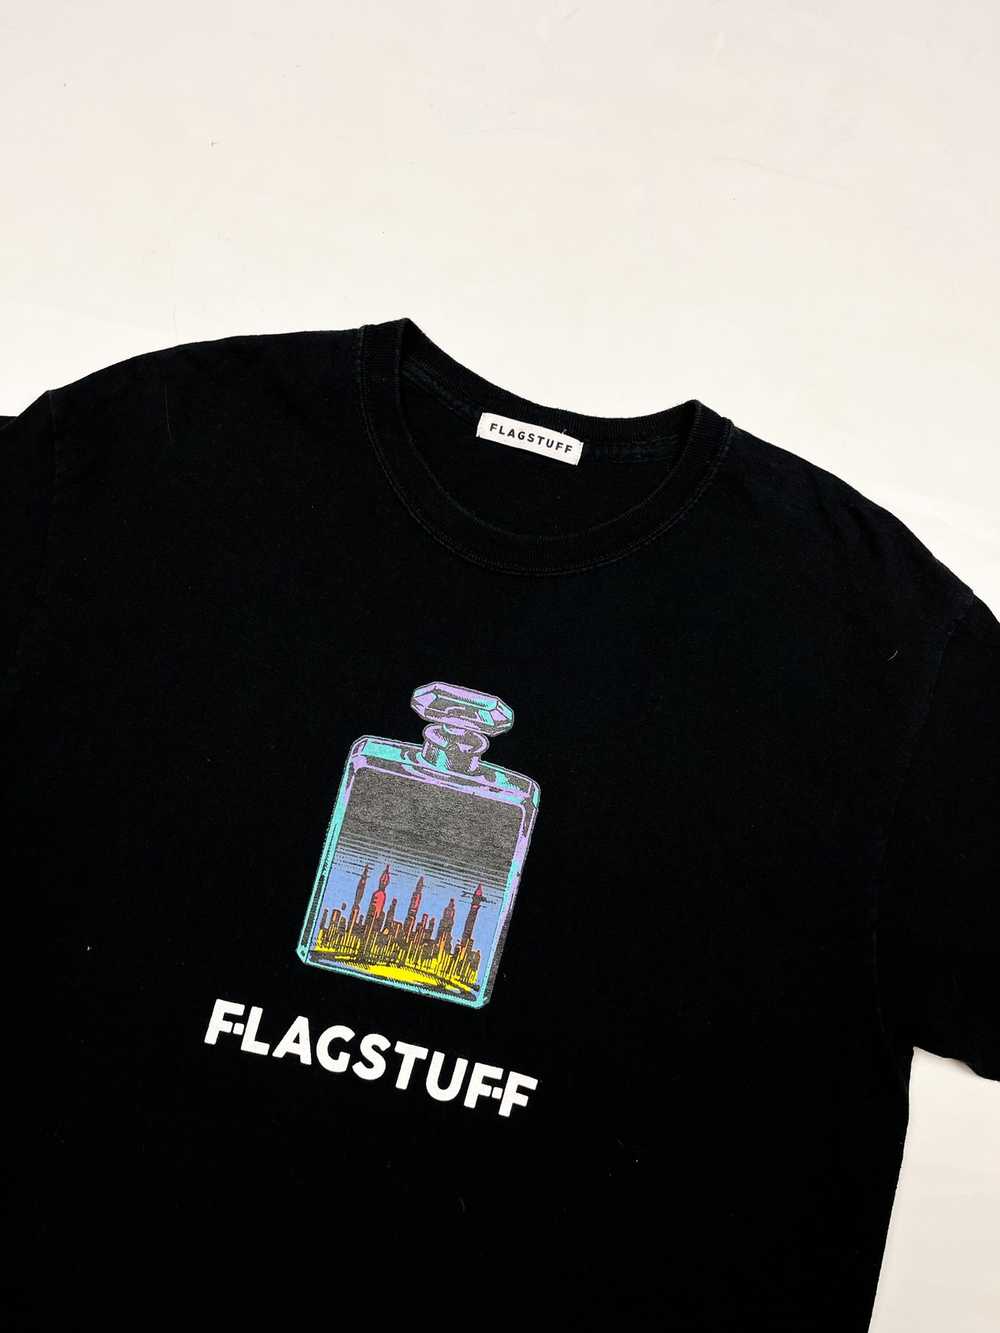 Flagstuff flagstuff black tshirt - image 2